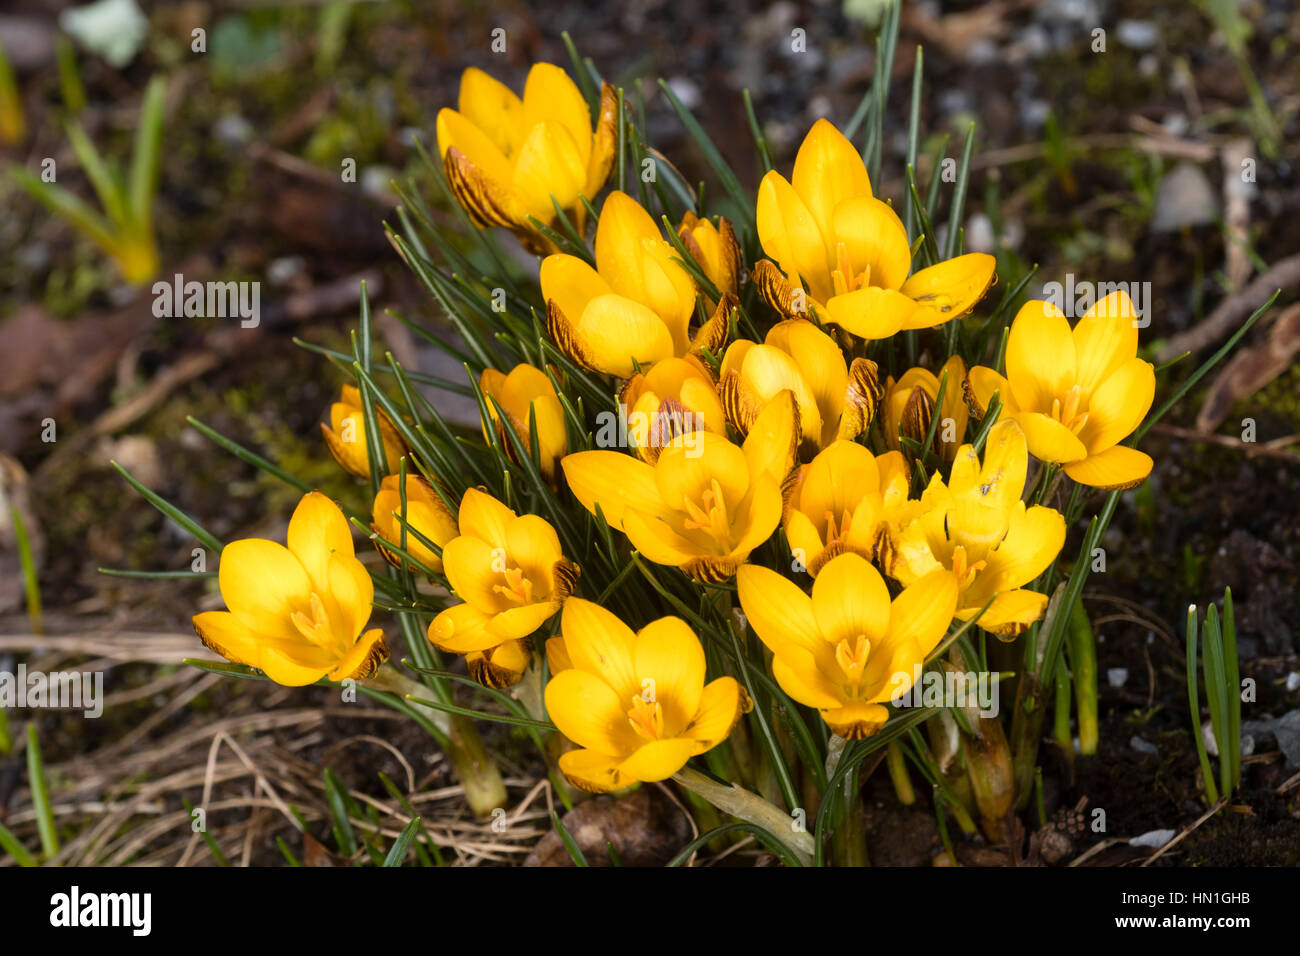 Yellow Flowers Of The February Flowering Corm Crocus Chrysanthus Stock Photo Alamy